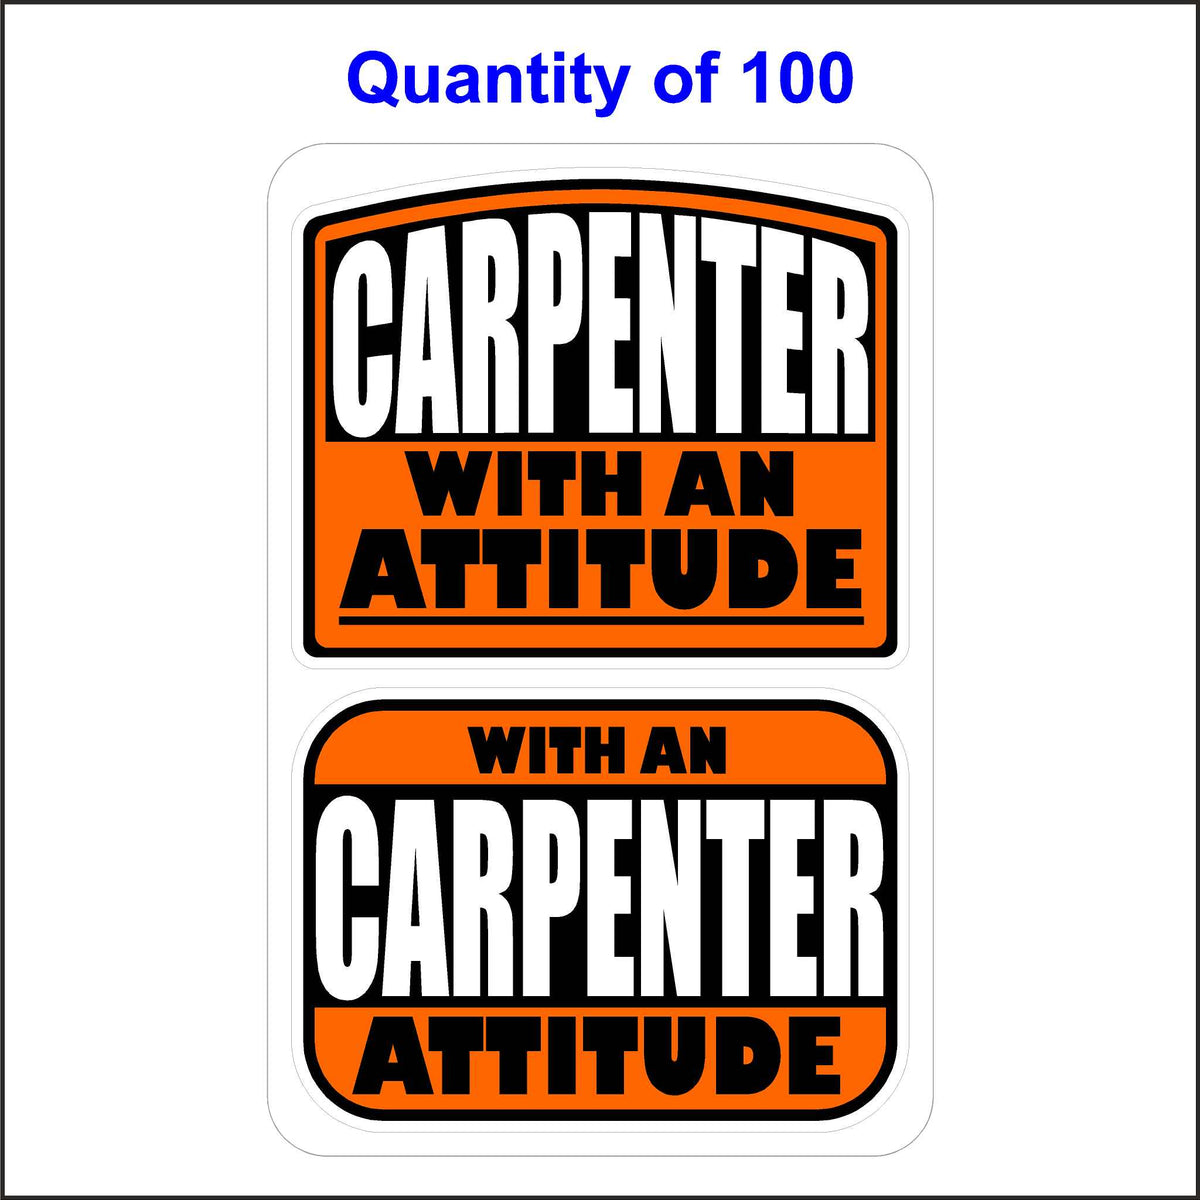 Carpenter With an Attitude Stickers 100 Quantity.